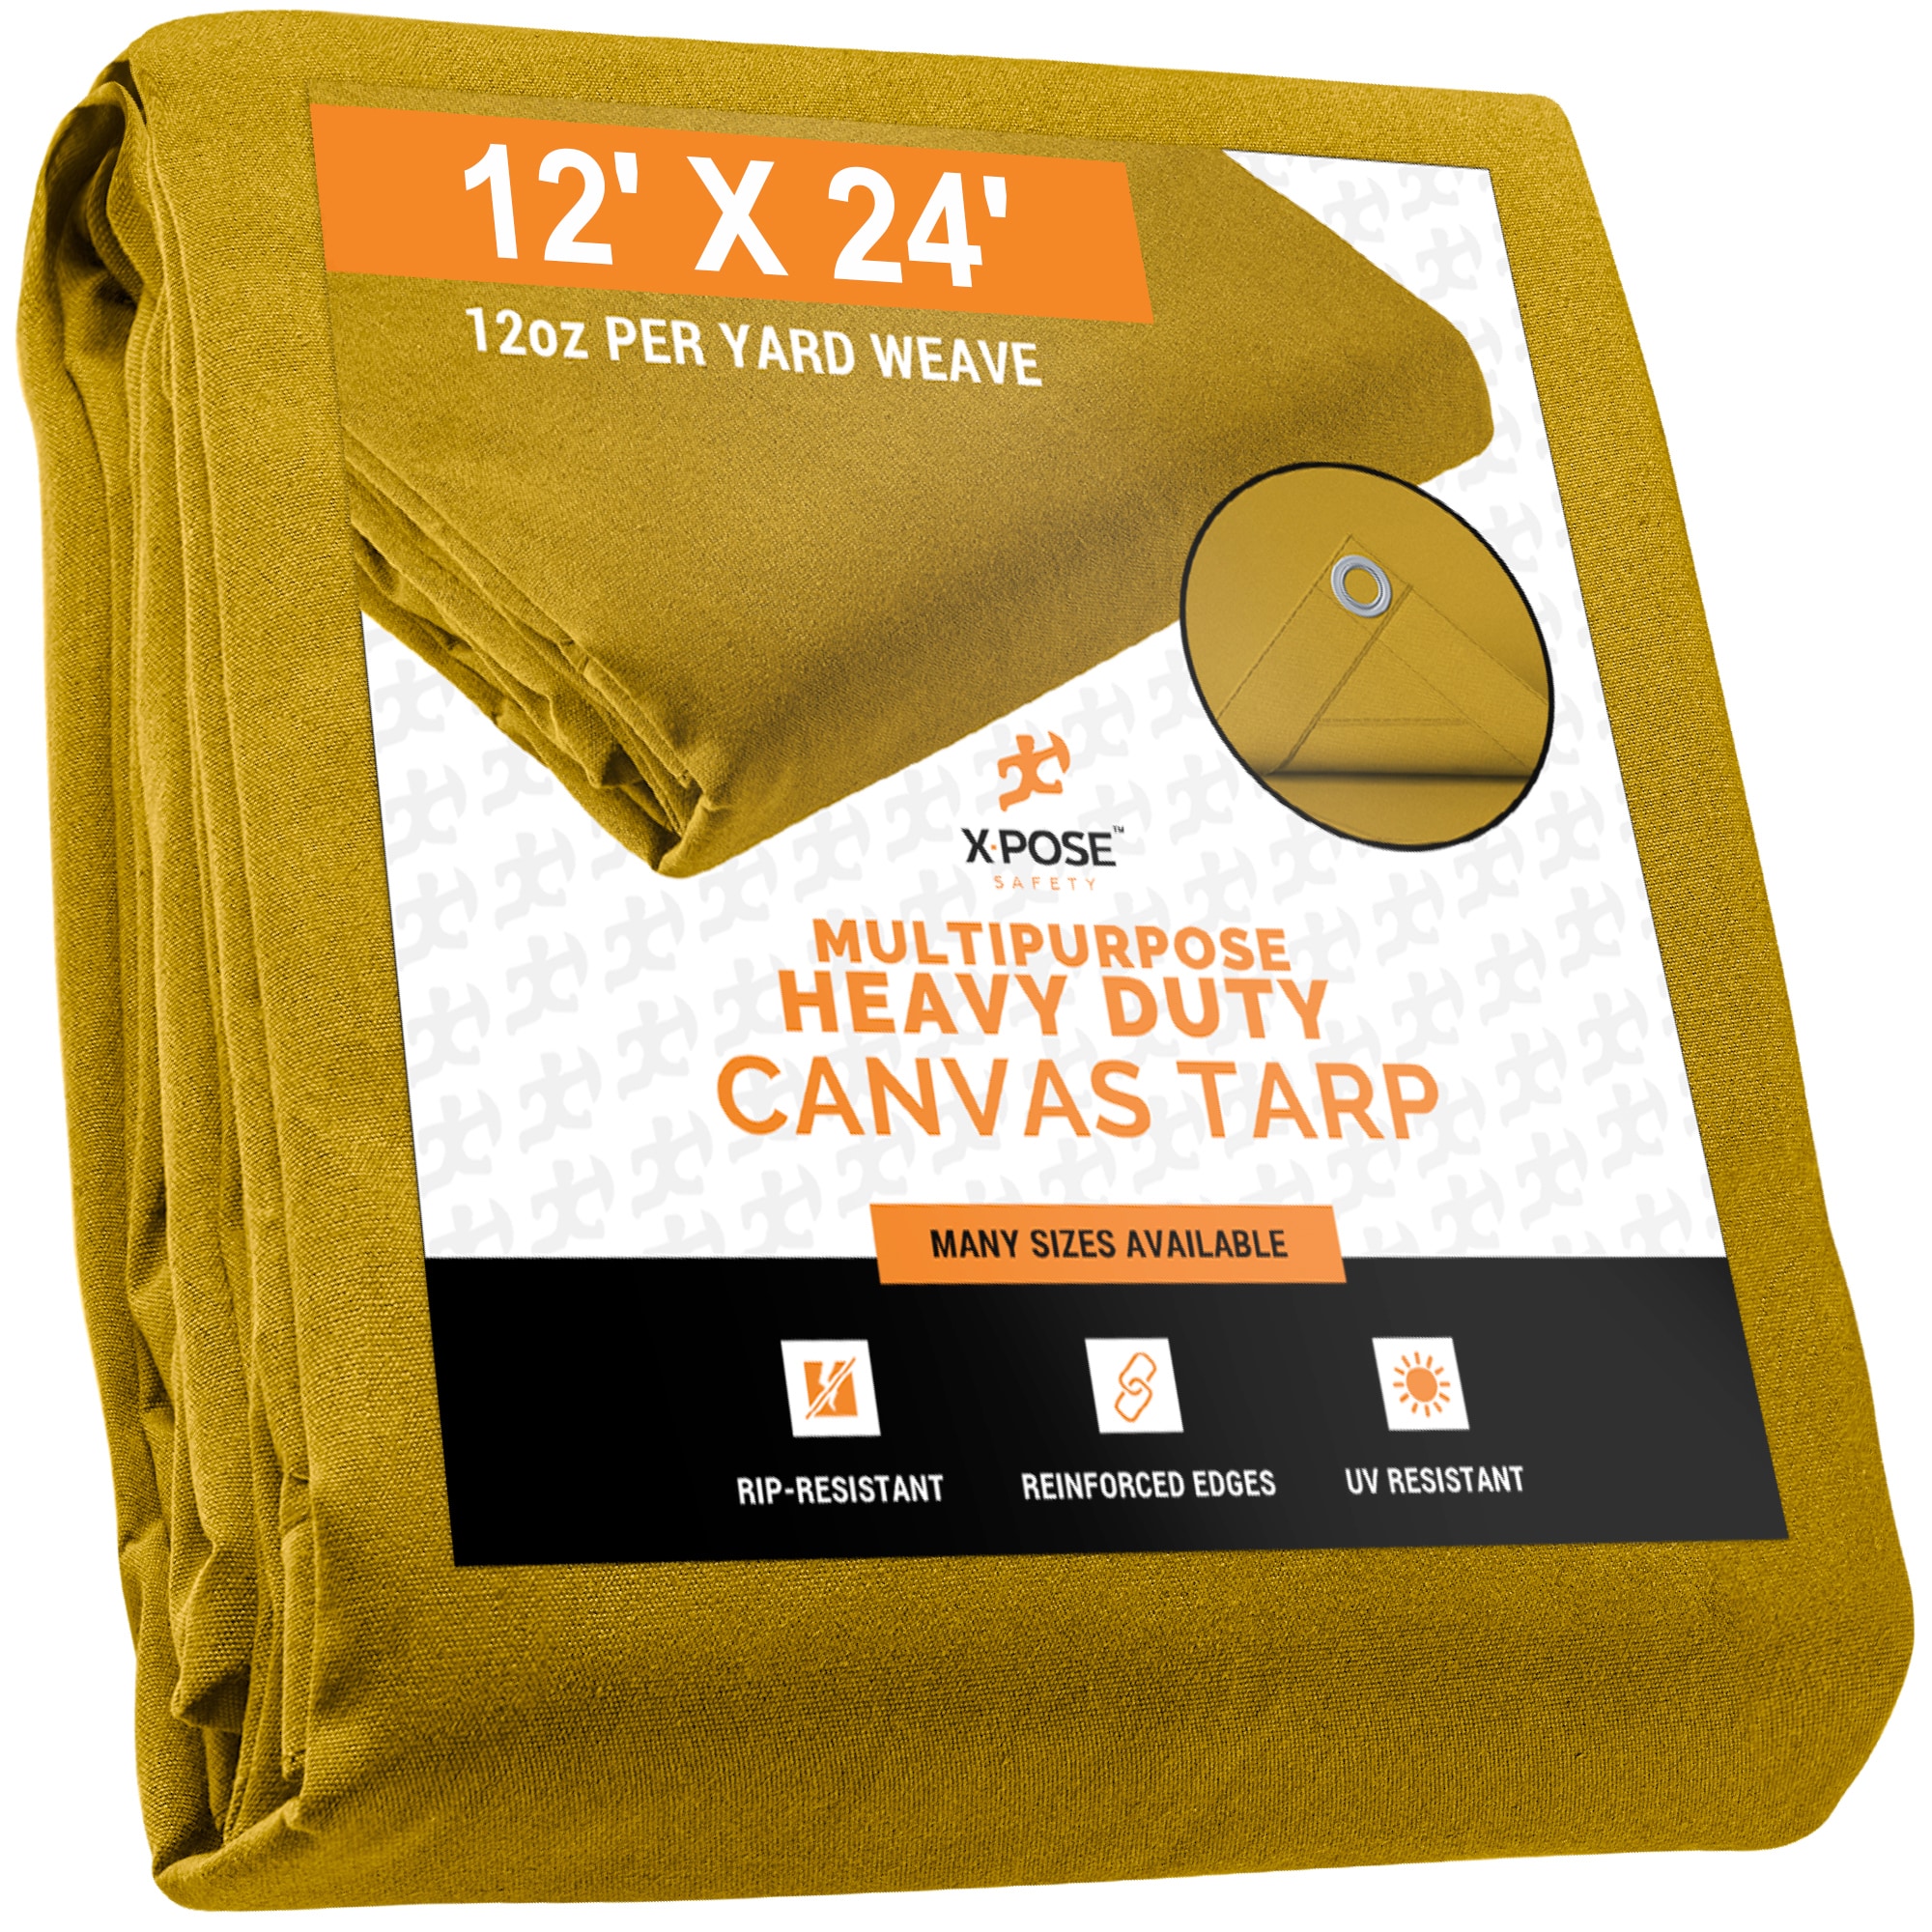 4' x 20' Canvas Drop Cloths - Painter Tarps - 10 oz | by Tarps Now